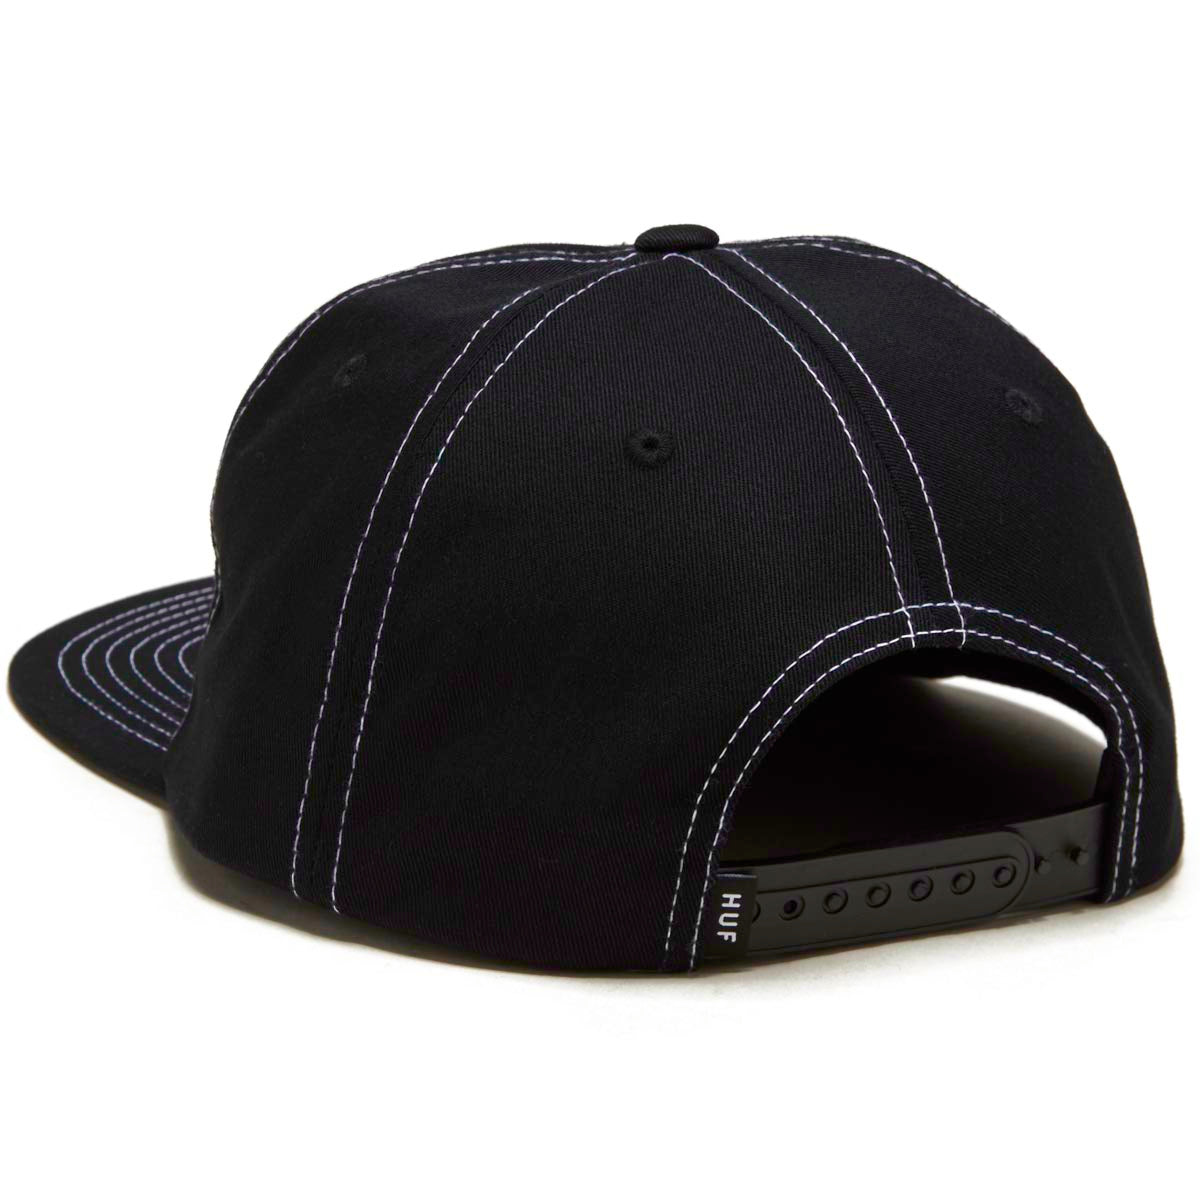 HUF Set Tt Snapback Hat - Black/White image 2